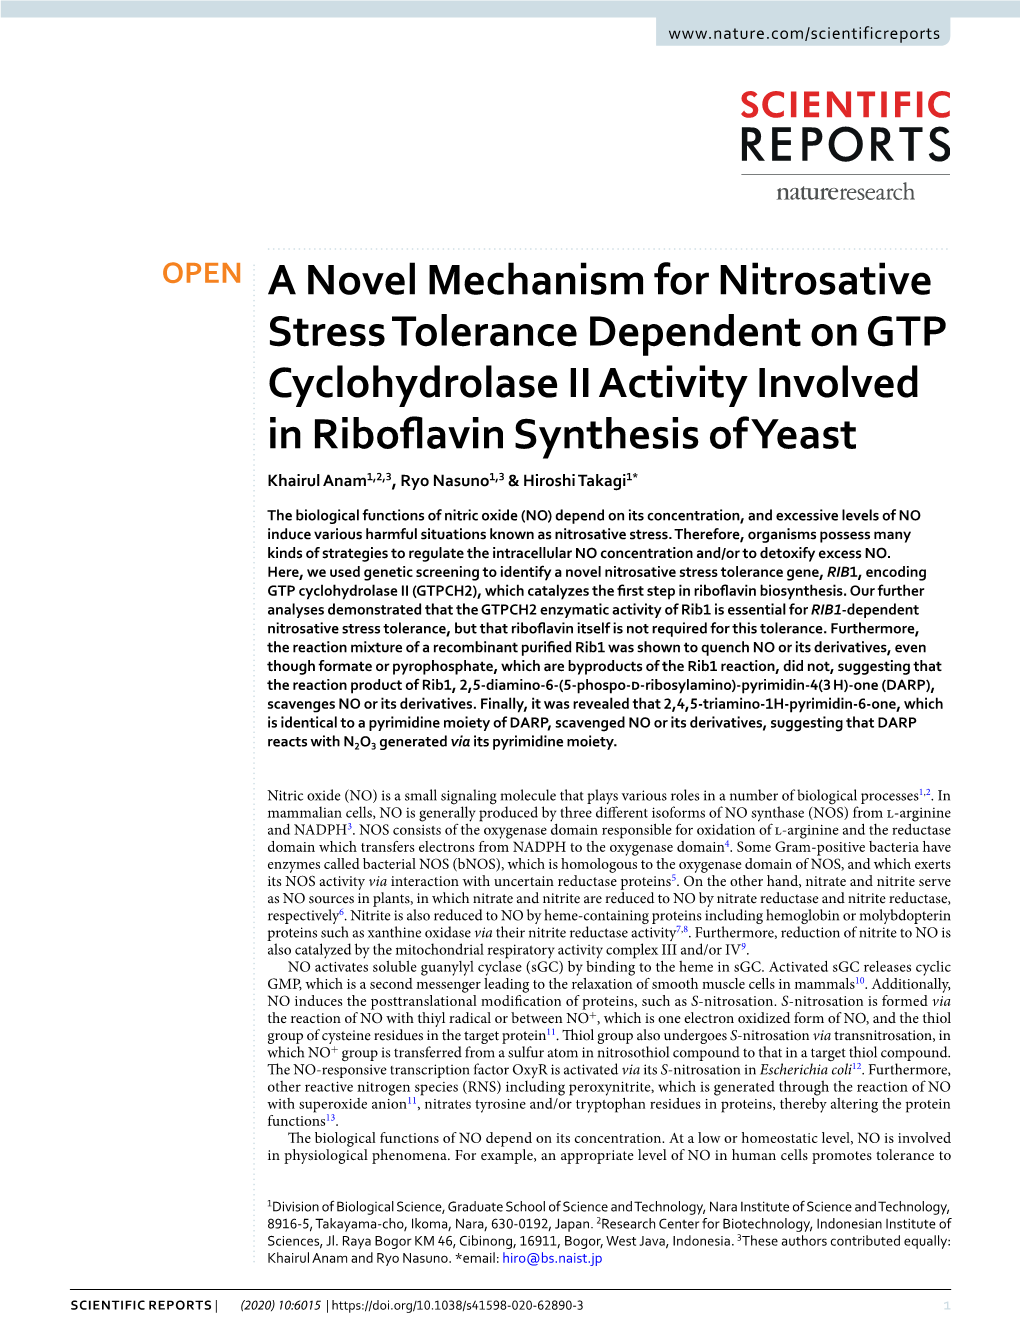 A Novel Mechanism for Nitrosative Stress Tolerance Dependent On